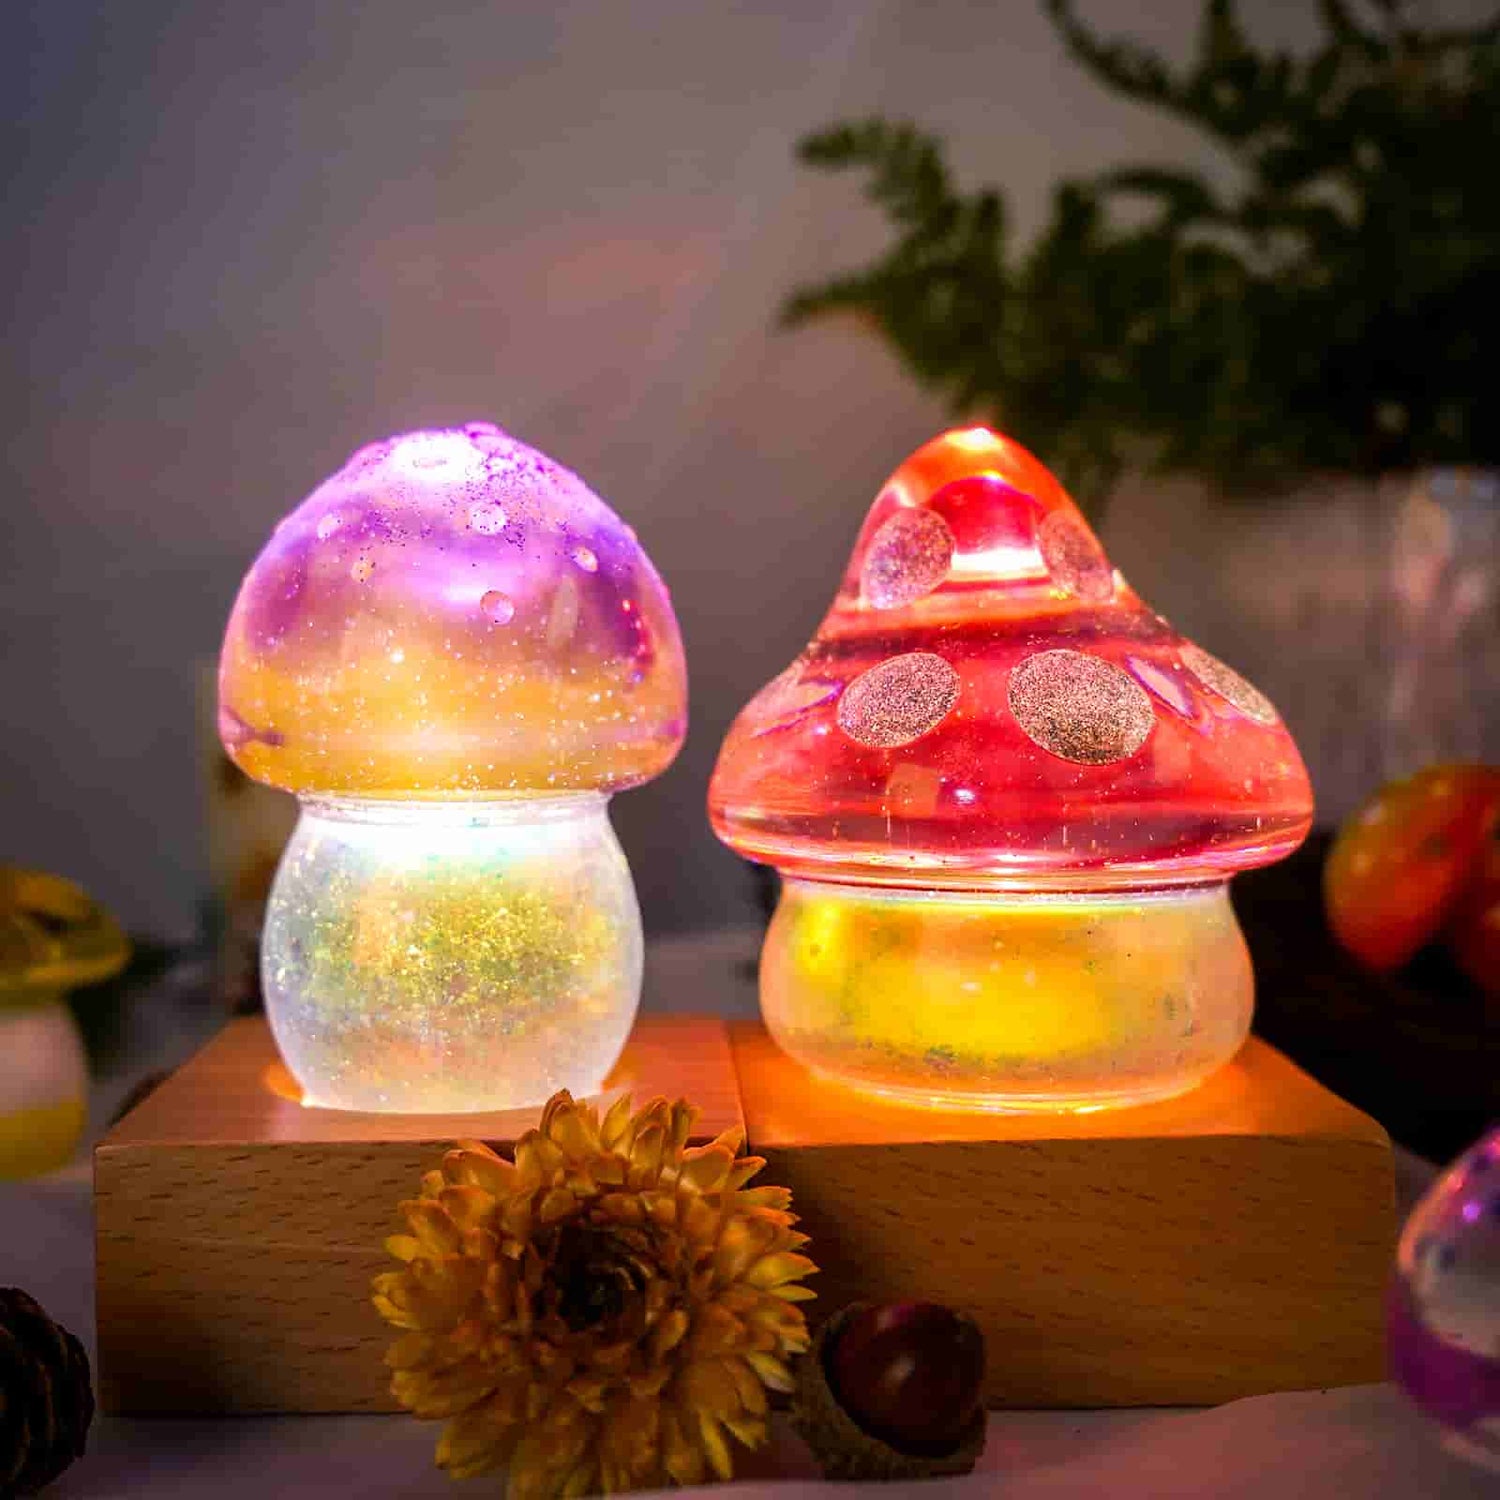 Mushroom Jar Resin Molds – Let's Resin